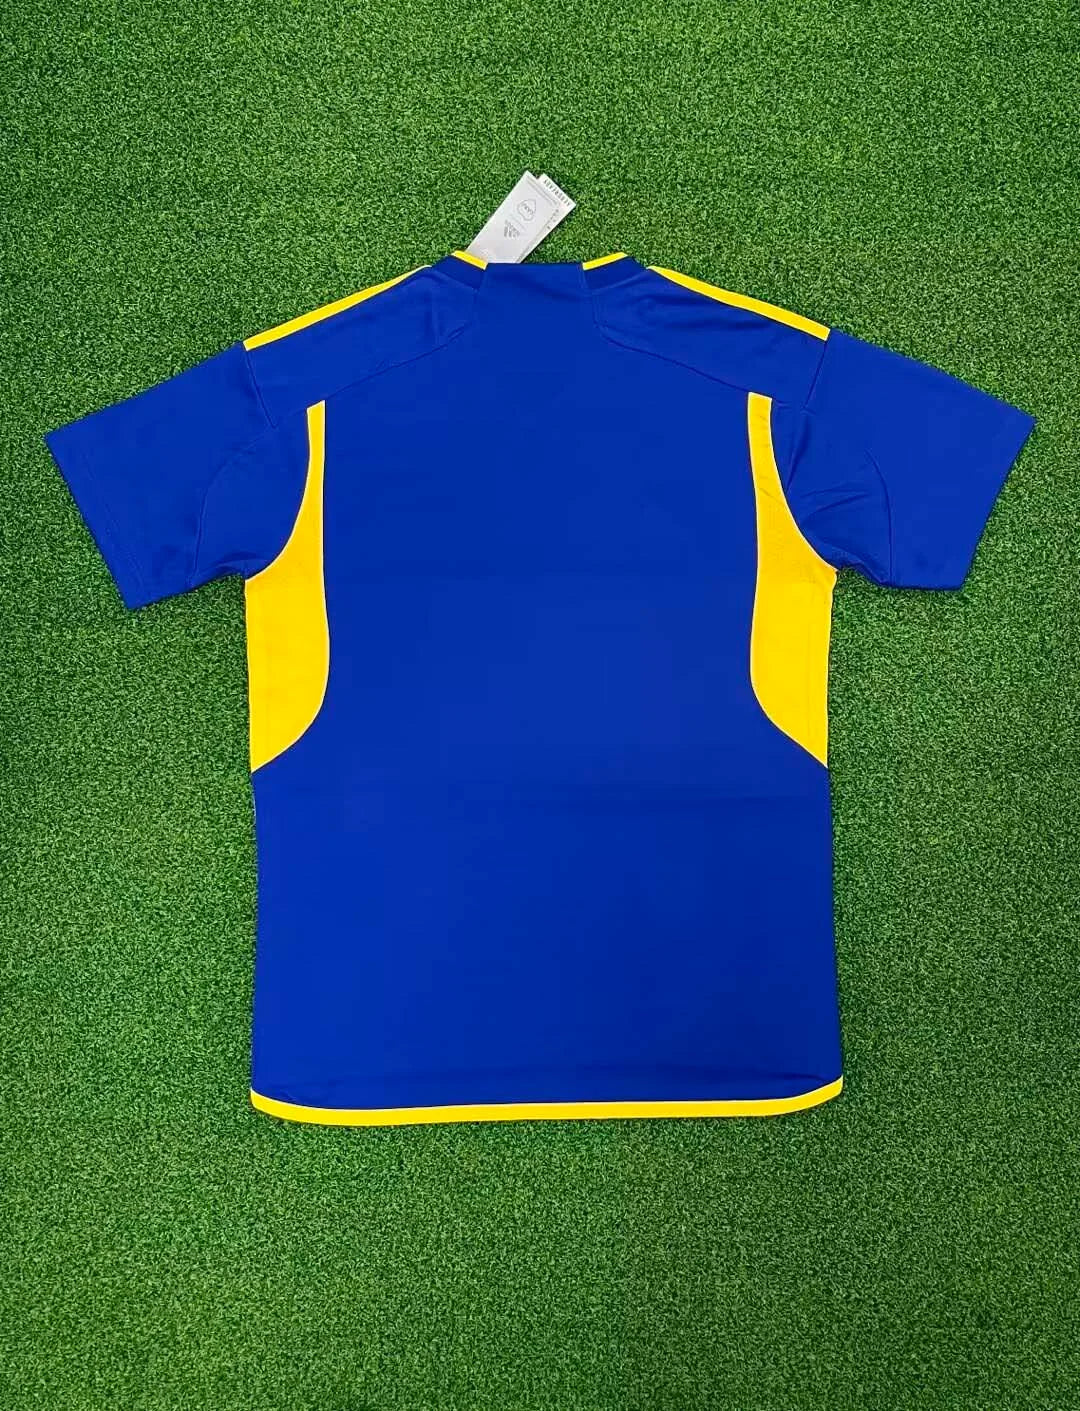 Boca Juniors 23/24 Club World Cup Edition Home Kit